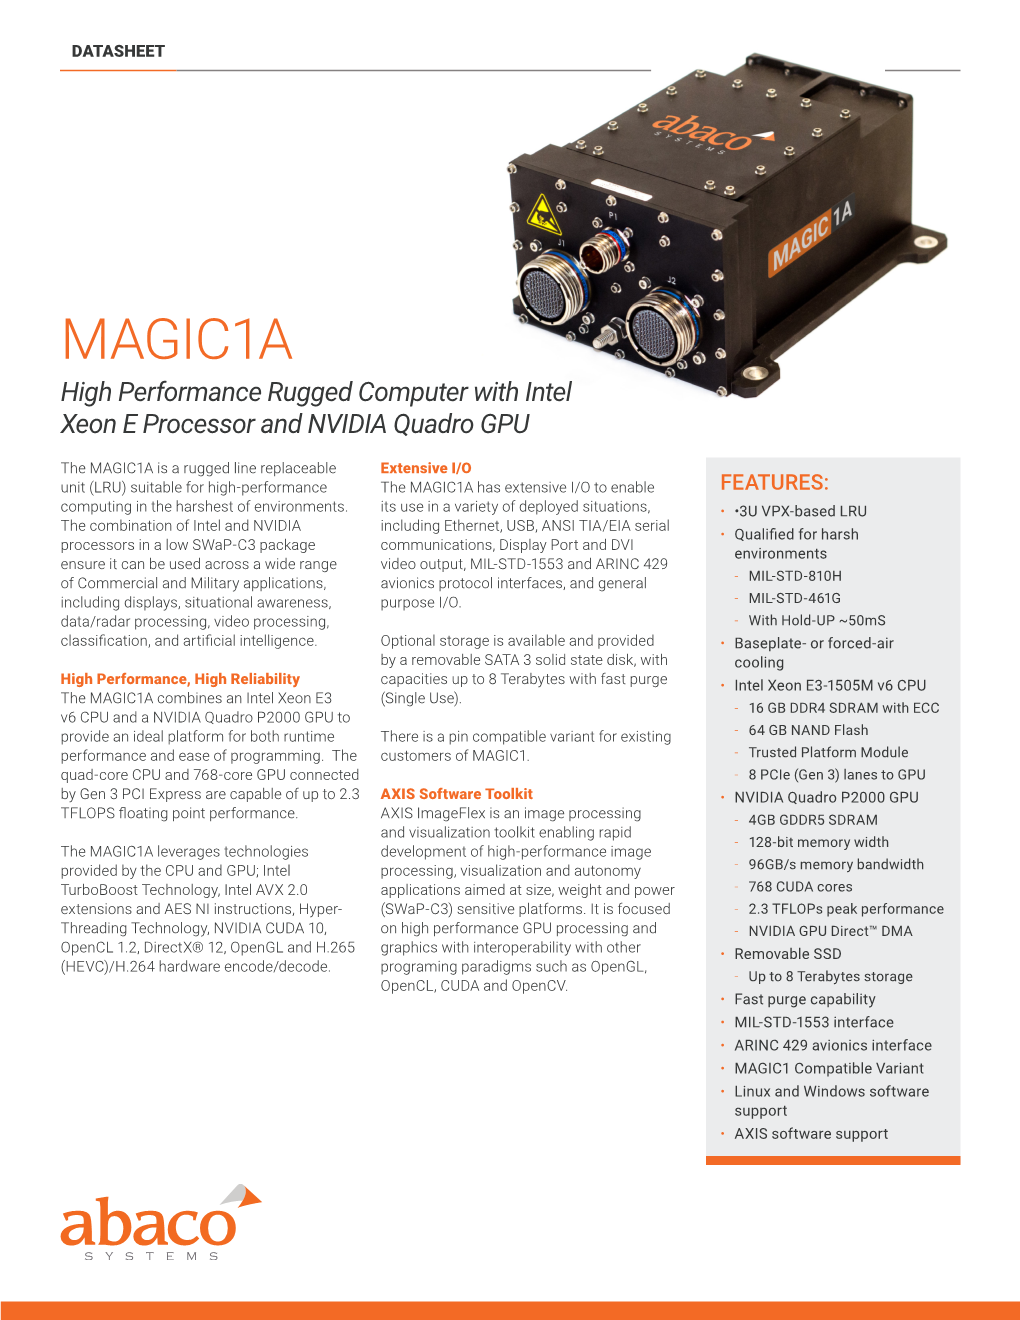 MAGIC1A High Performance Rugged Computer with Intel Xeon E Processor and NVIDIA Quadro GPU